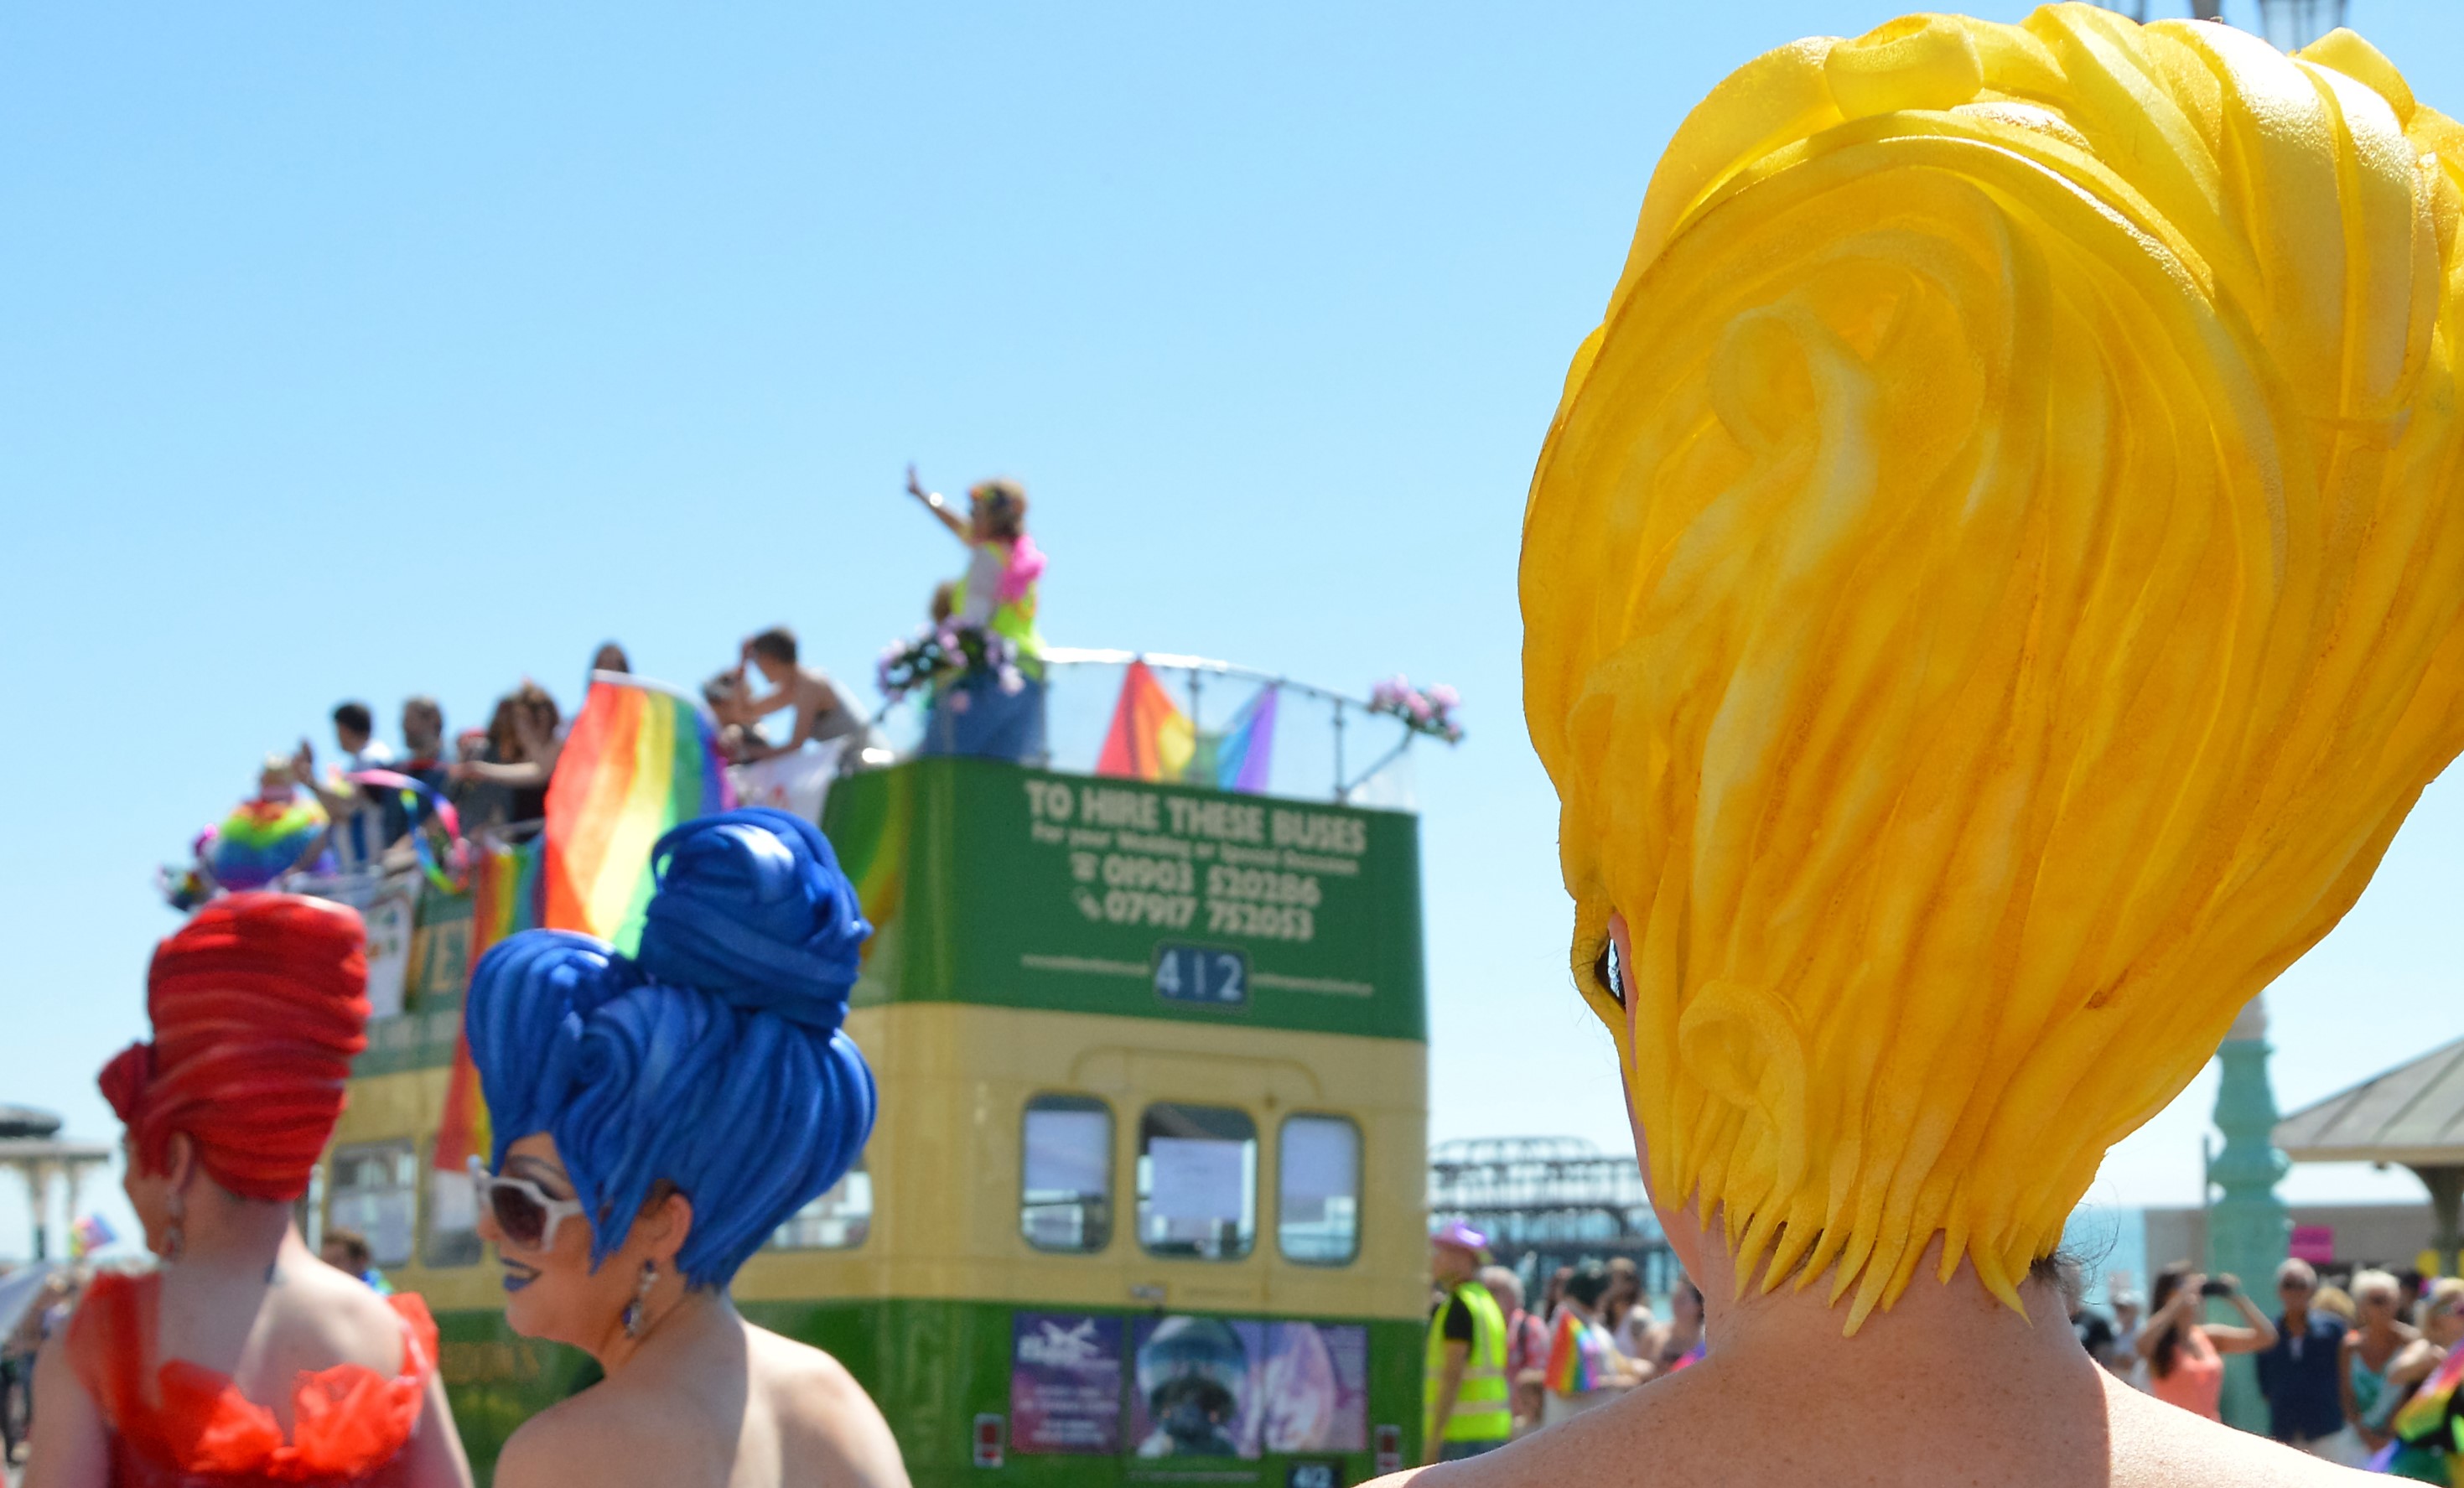 Brighton Pride 2016